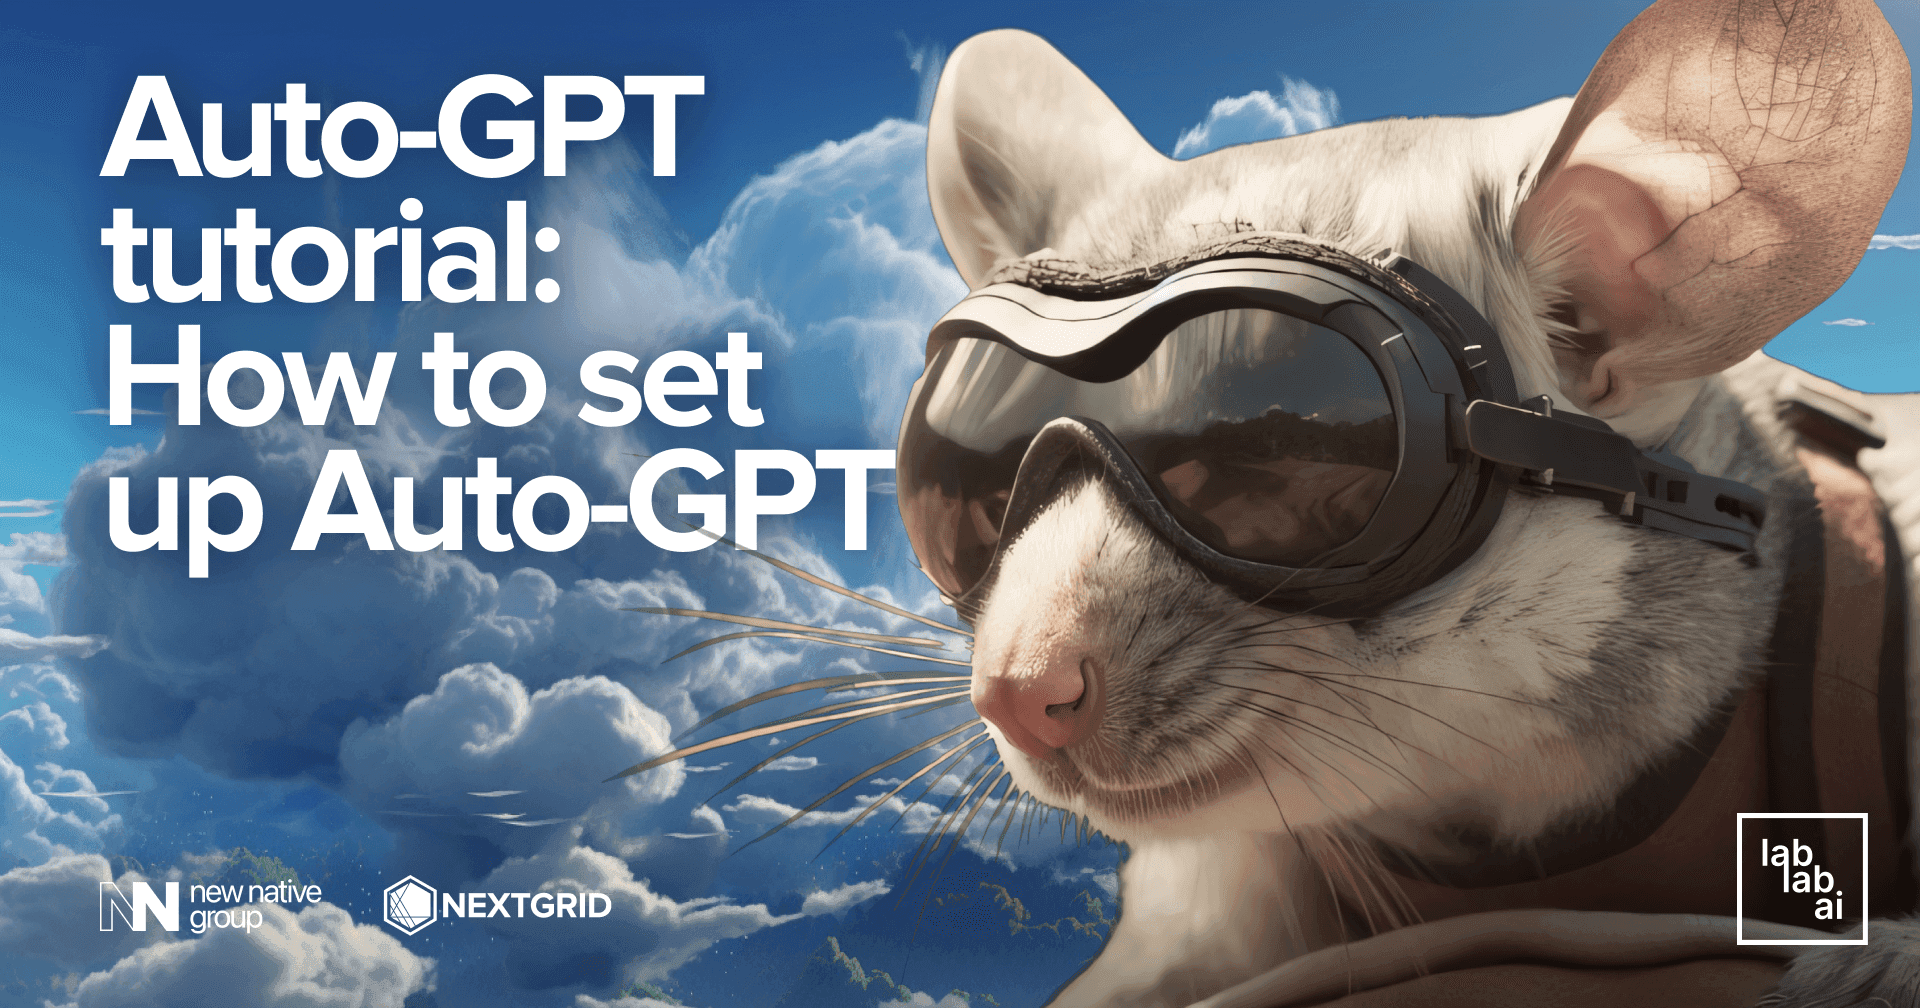 Auto-GPT tutorial: How to set up Auto-GPT